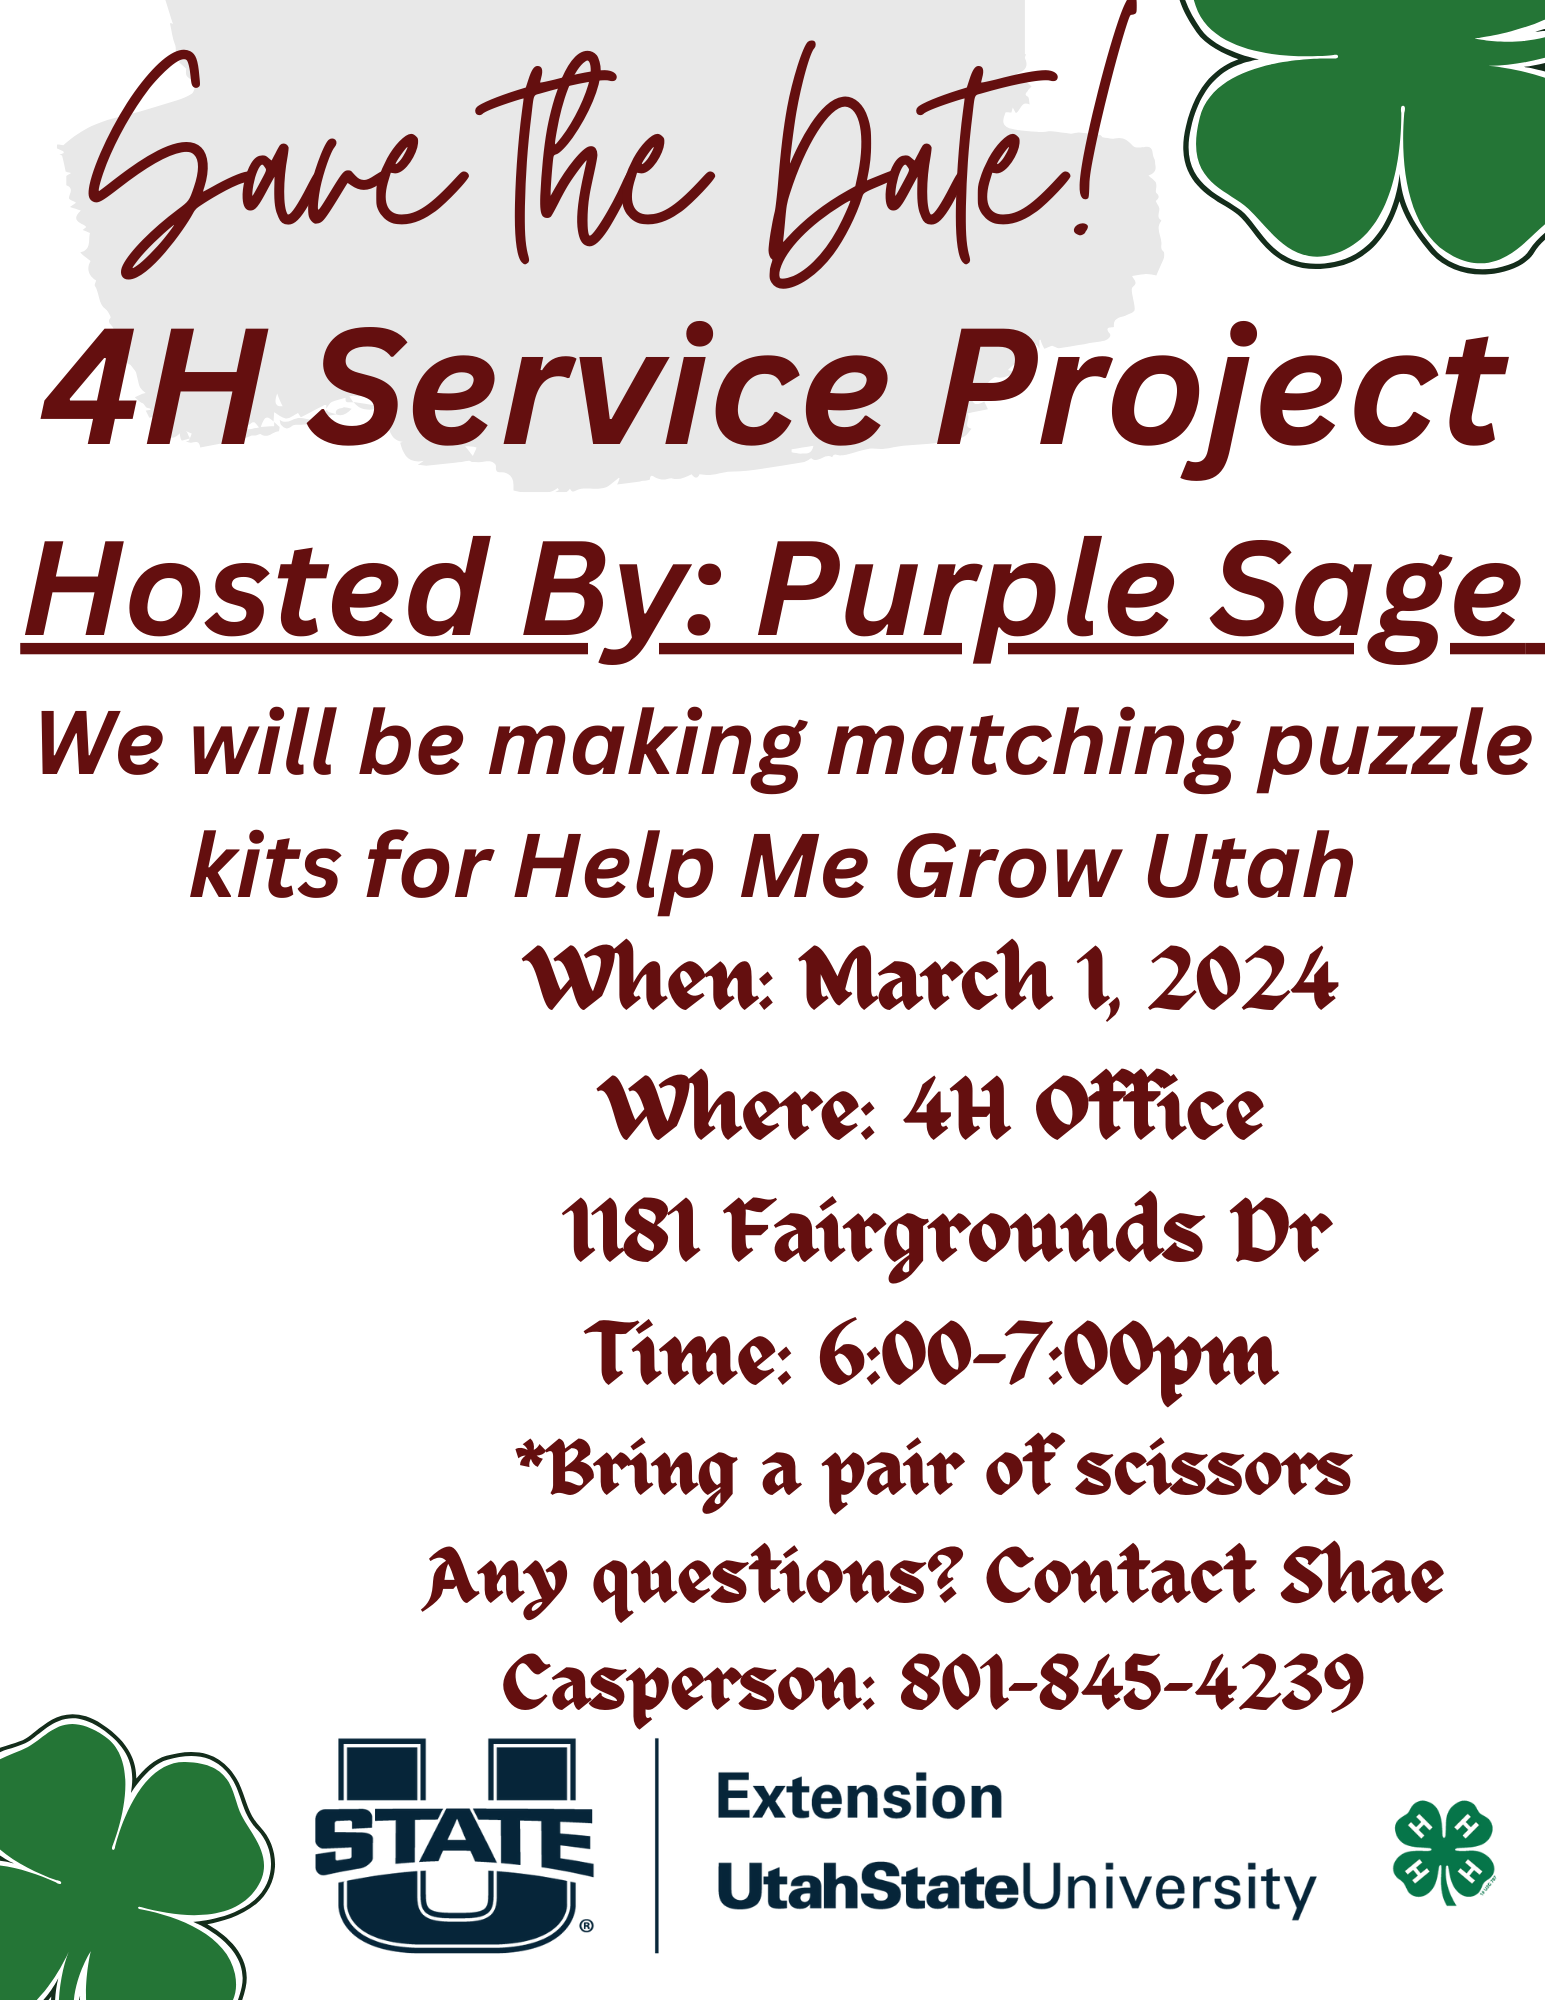 Purple Sage Service Project 